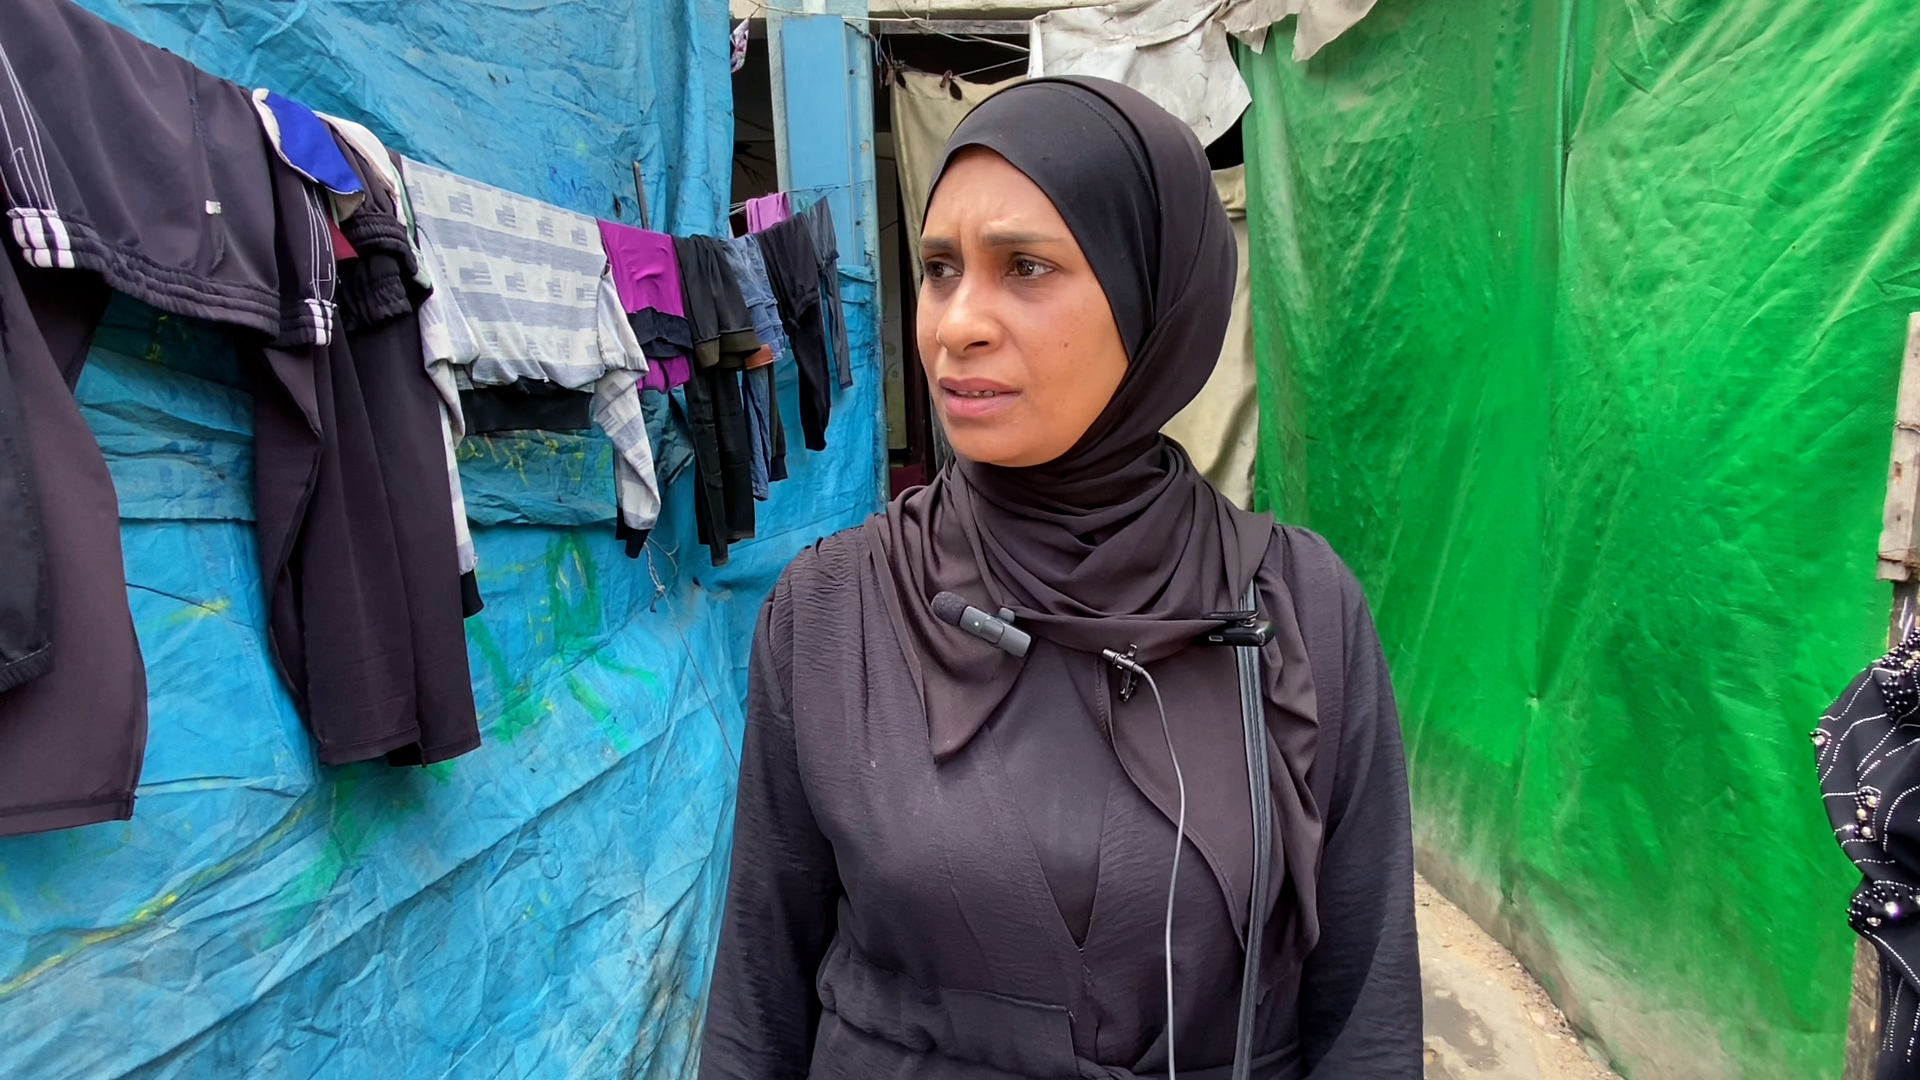 Hala Abdan, a lawyer, says Israel’s bombardment in Gaza has felt like “200 days of catastrophe.”